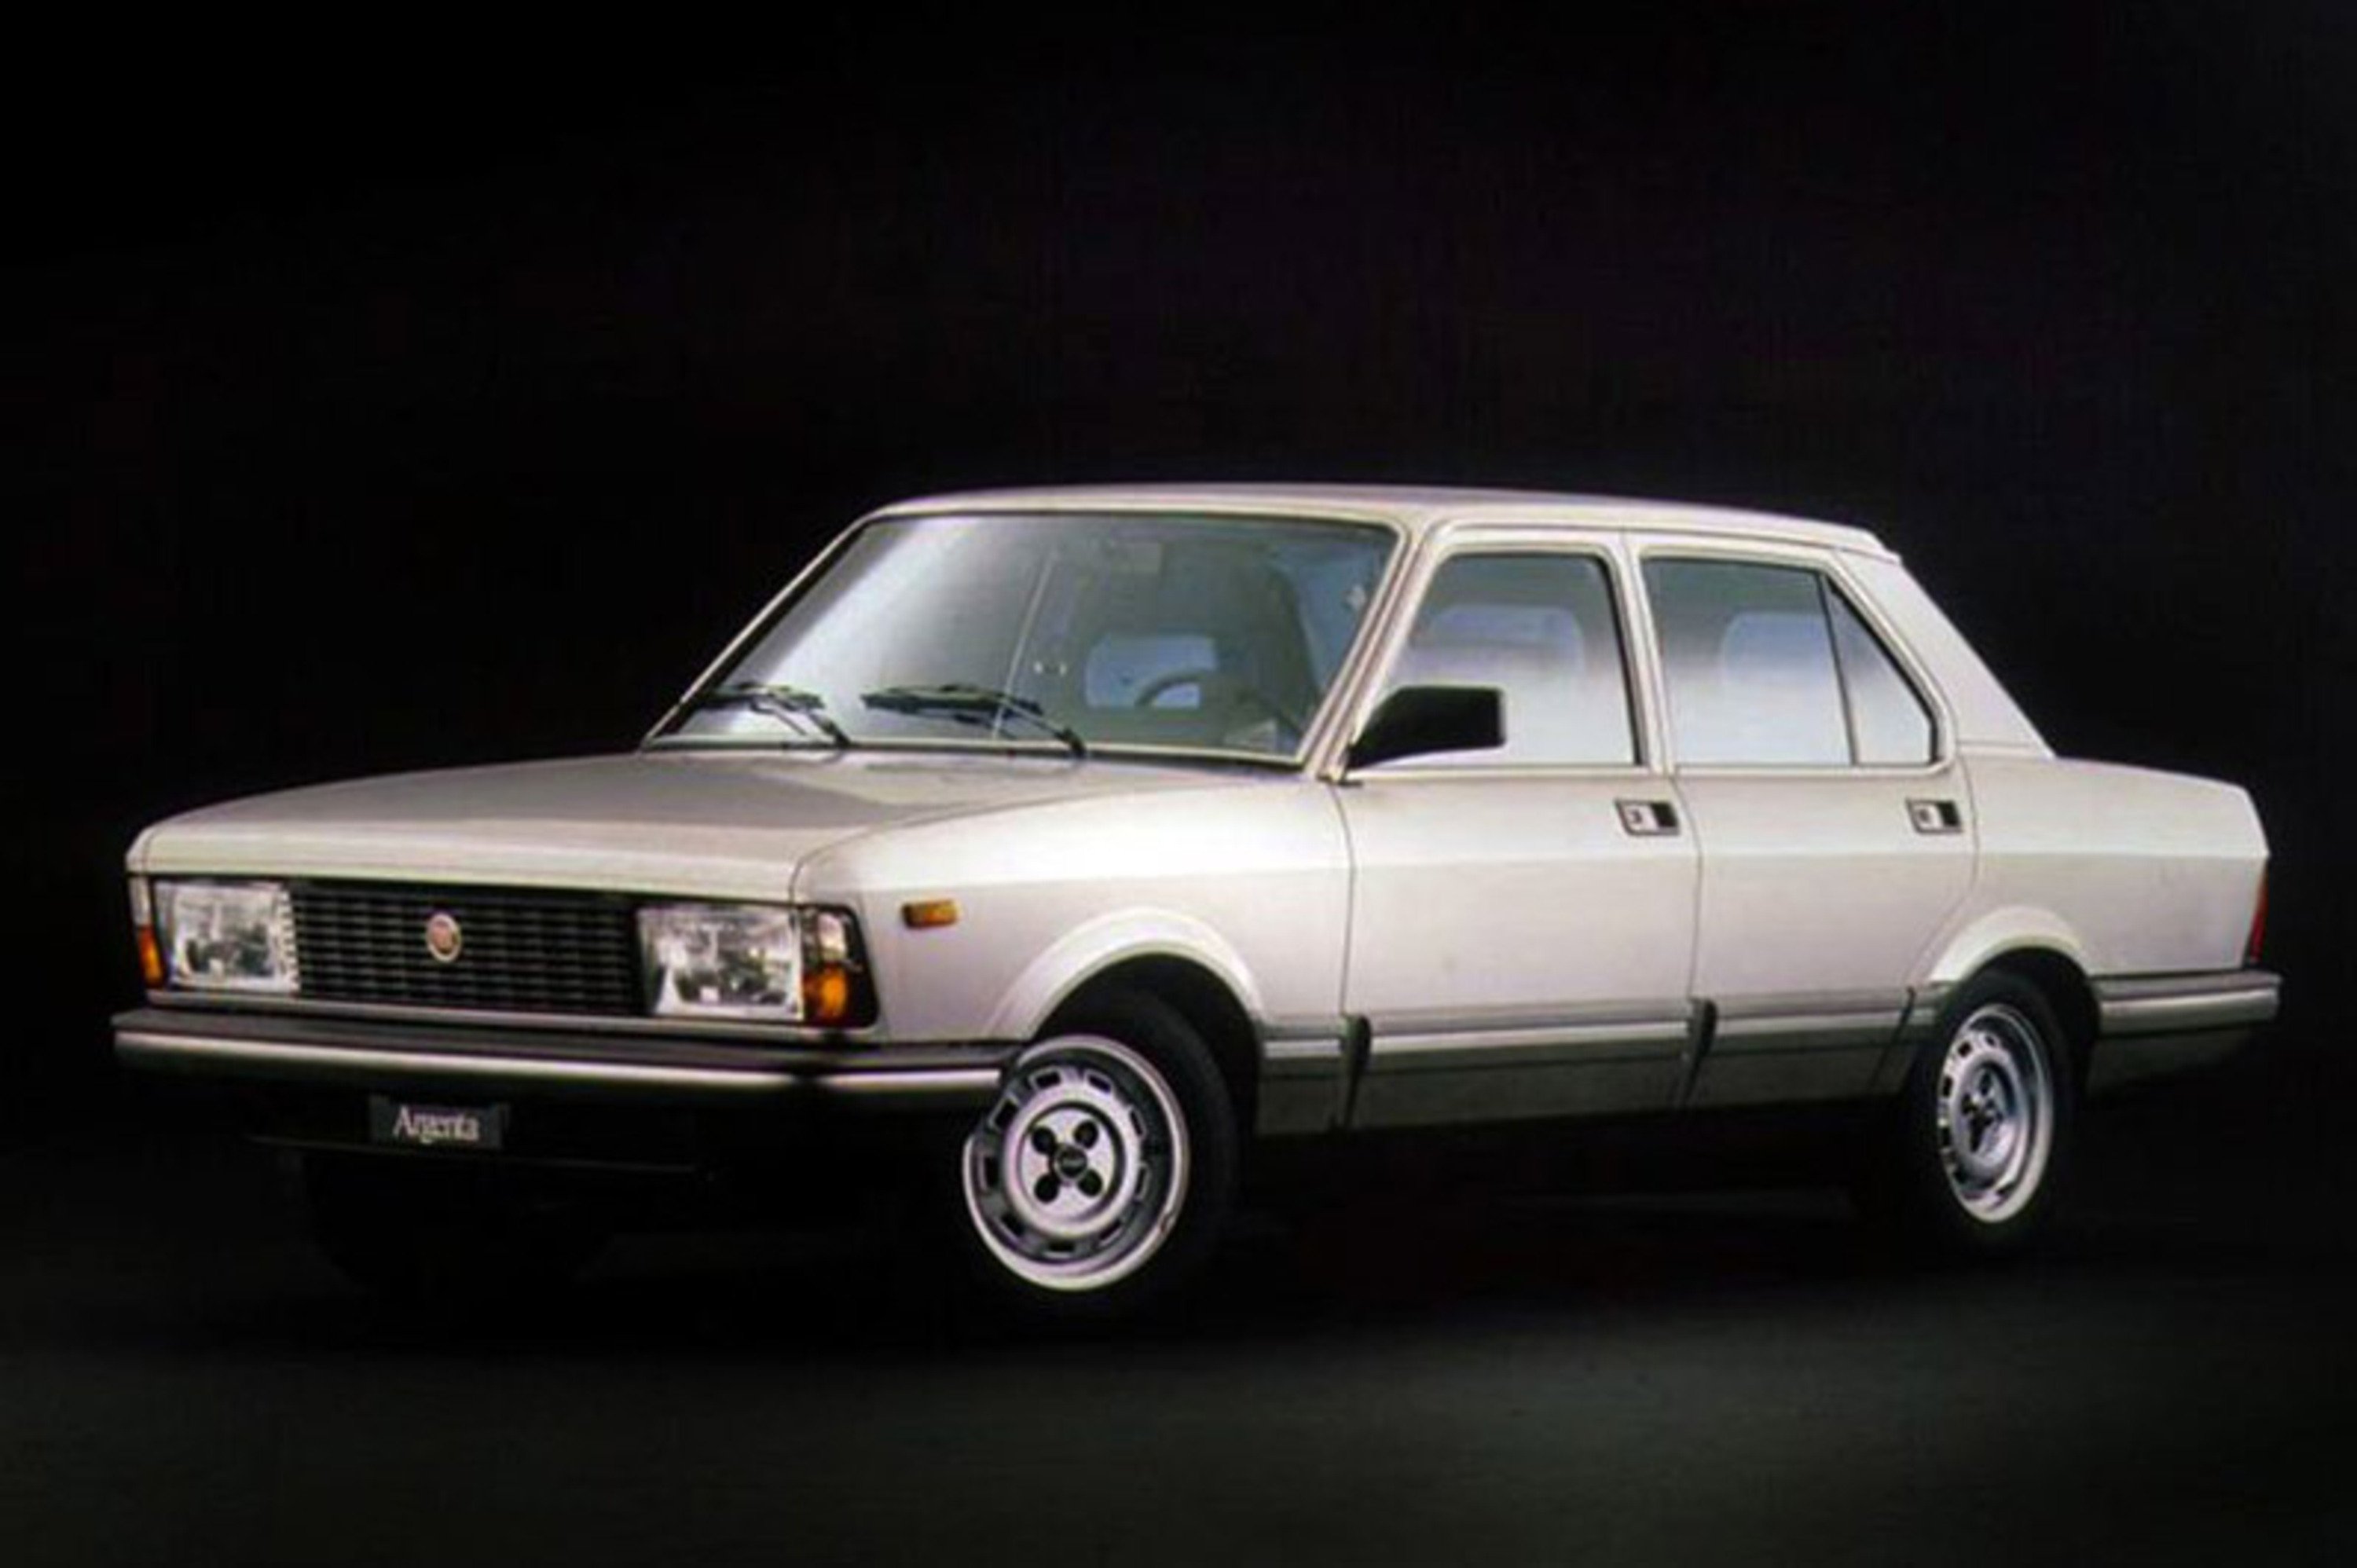 Fiat Argenta (1981-85)